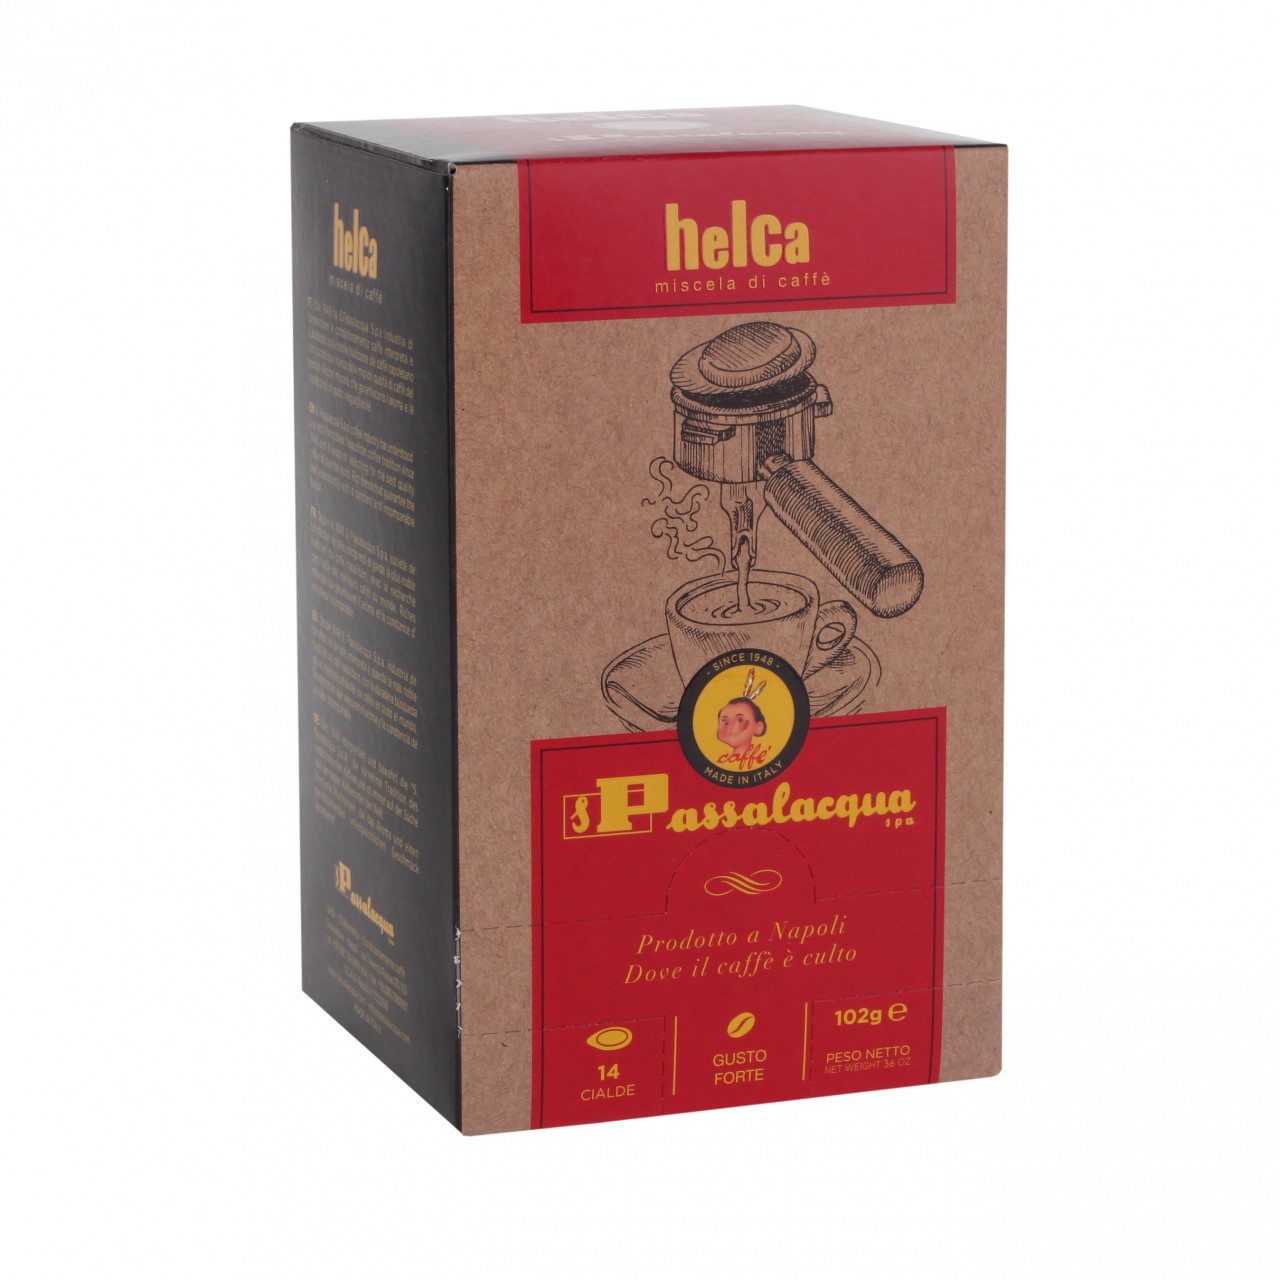 Passalacqua Helca Pads 14 Piece